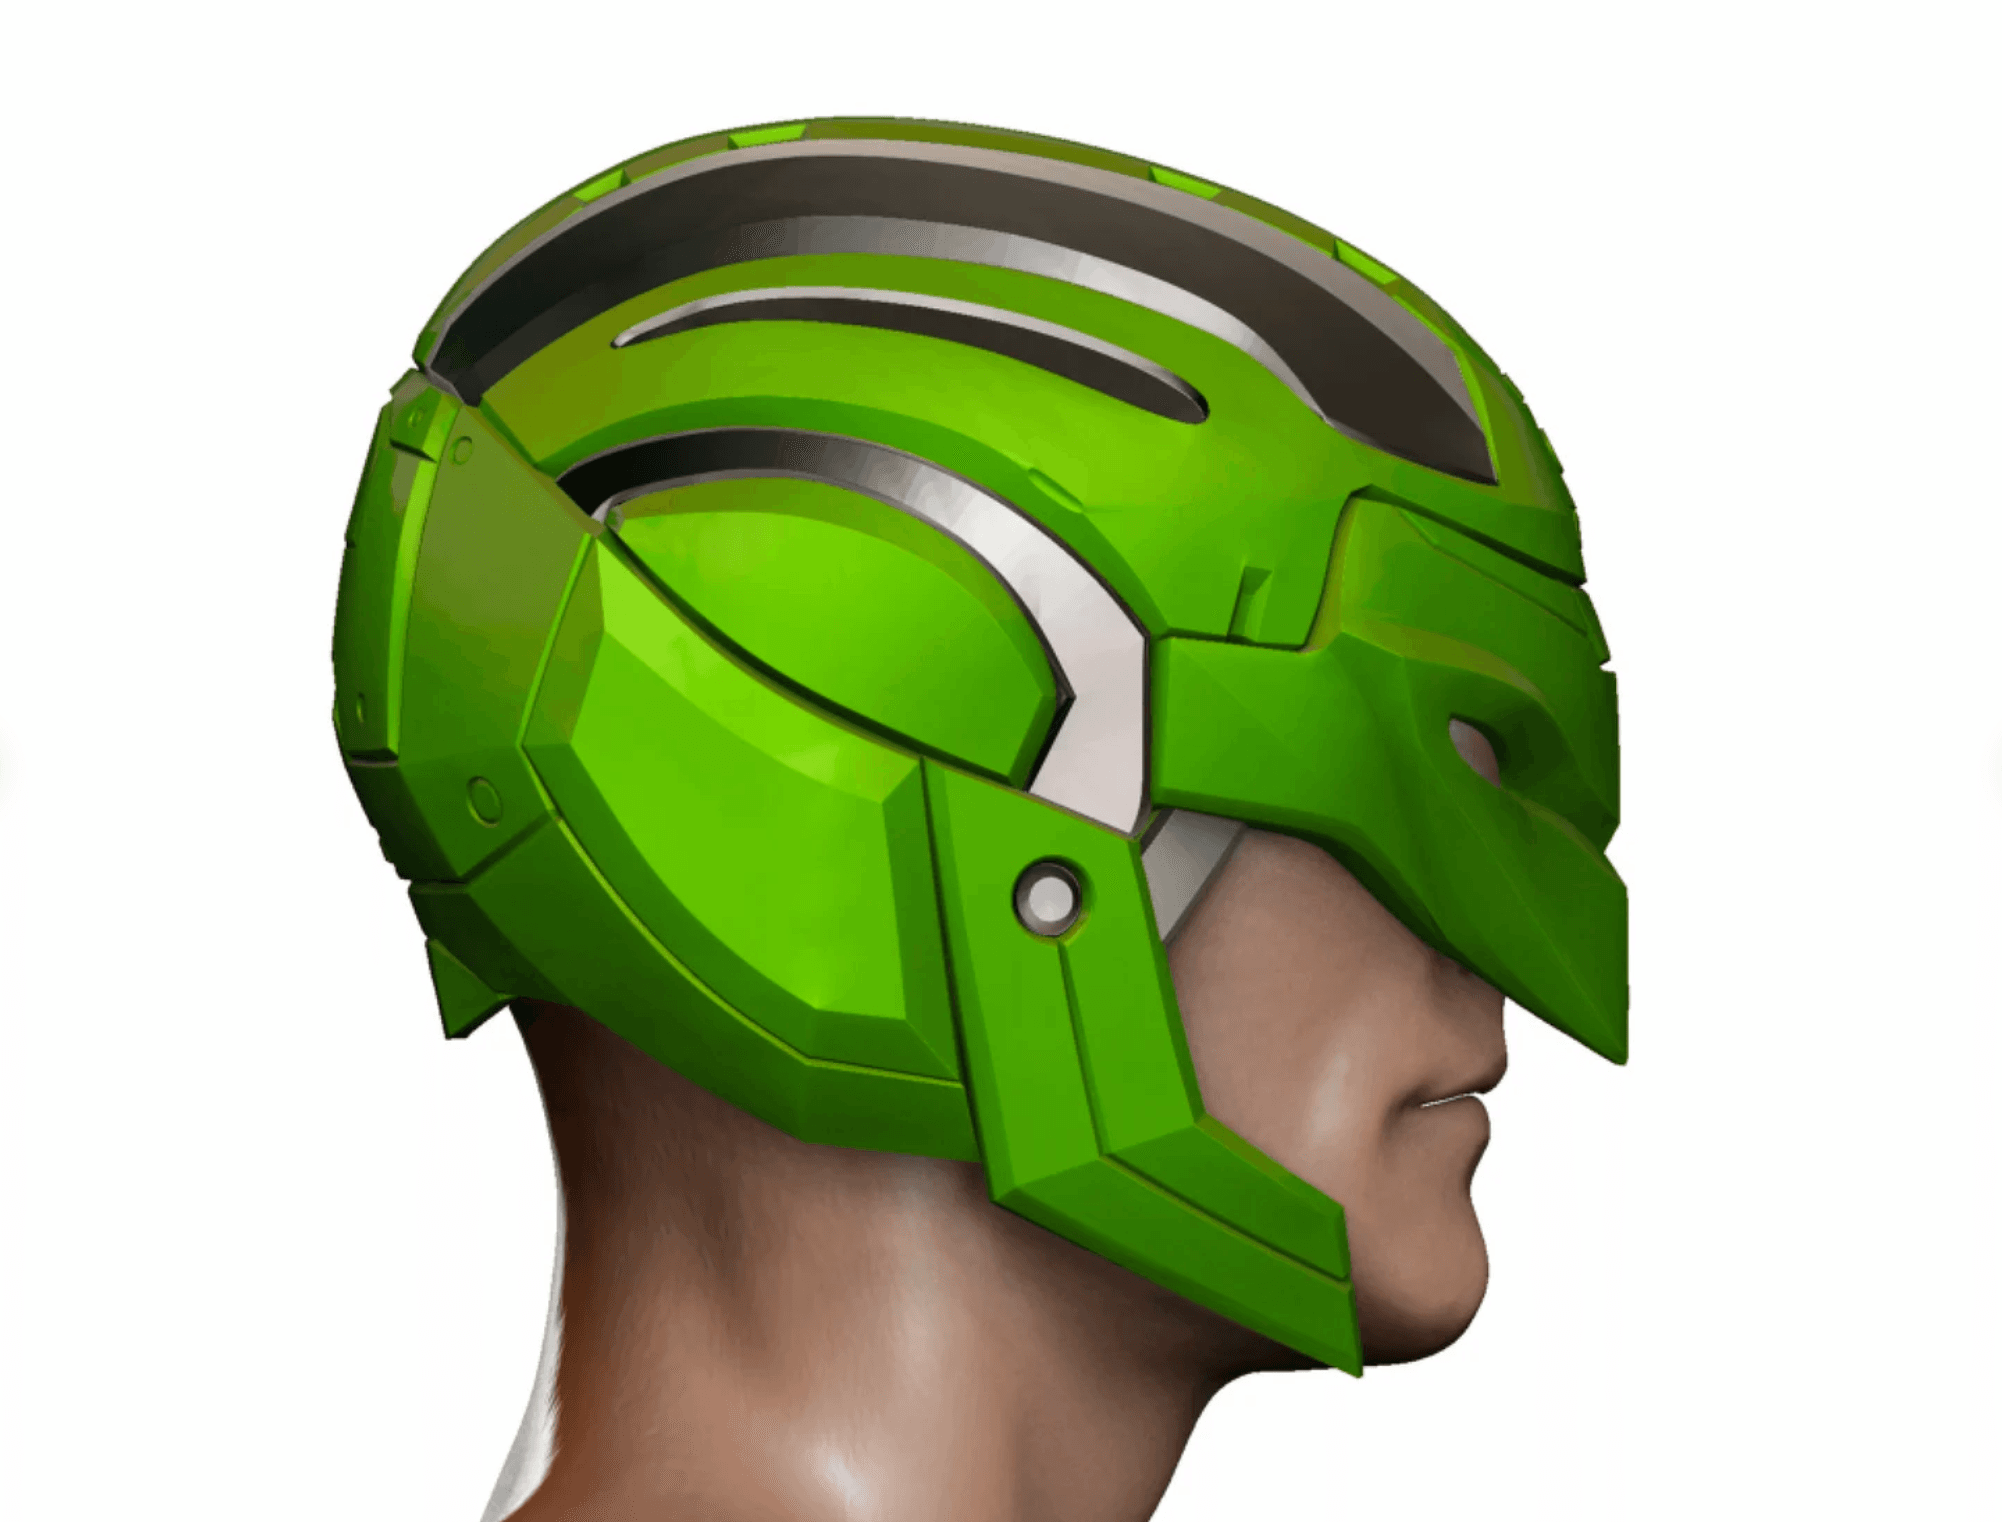 Sci Fi Helmet 3d model